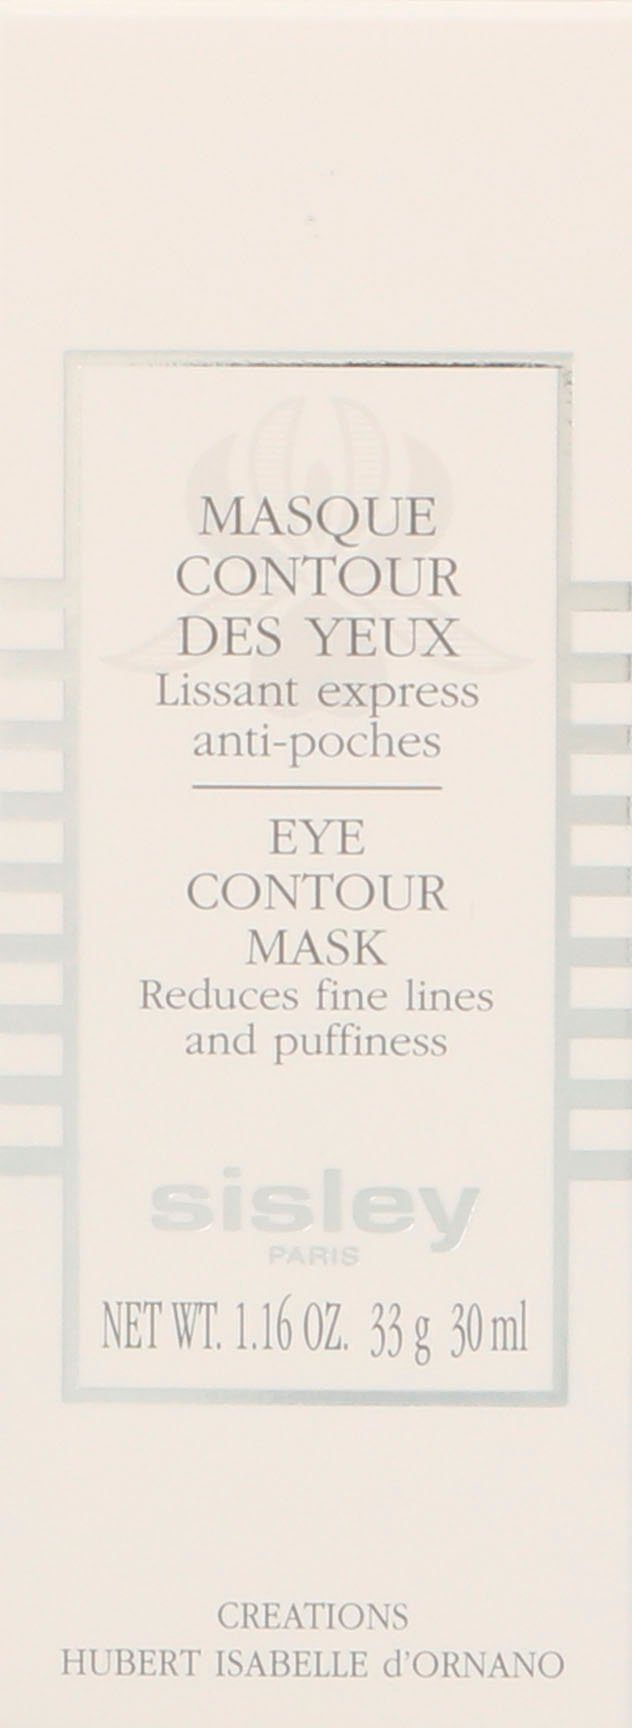 Gesichtsmaske sisley Contour Mask Eye